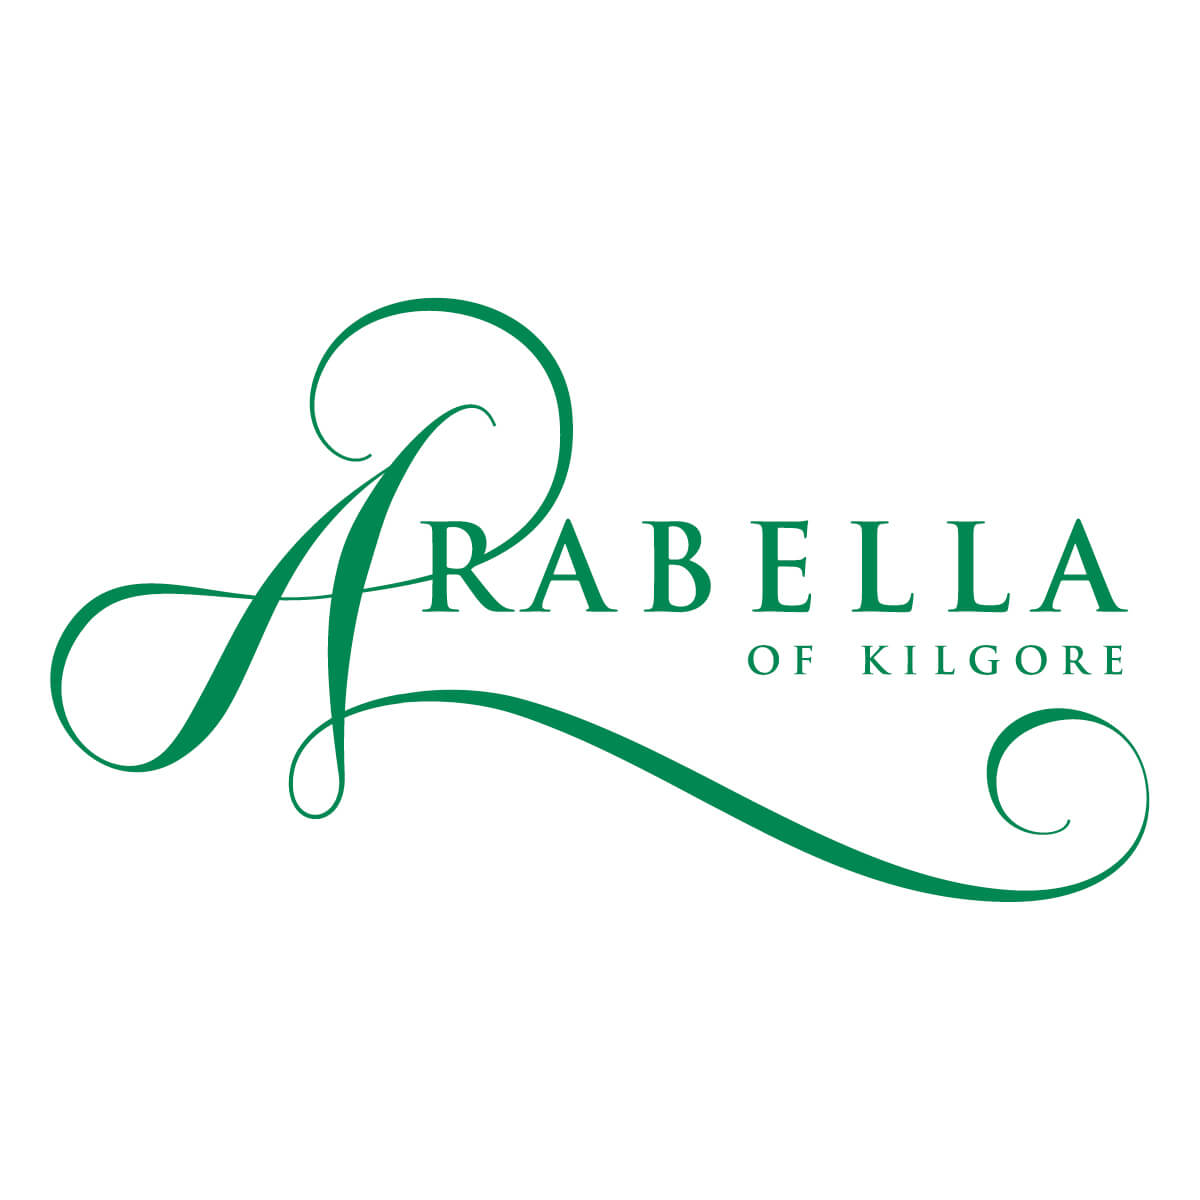 Arabella of Kilgore